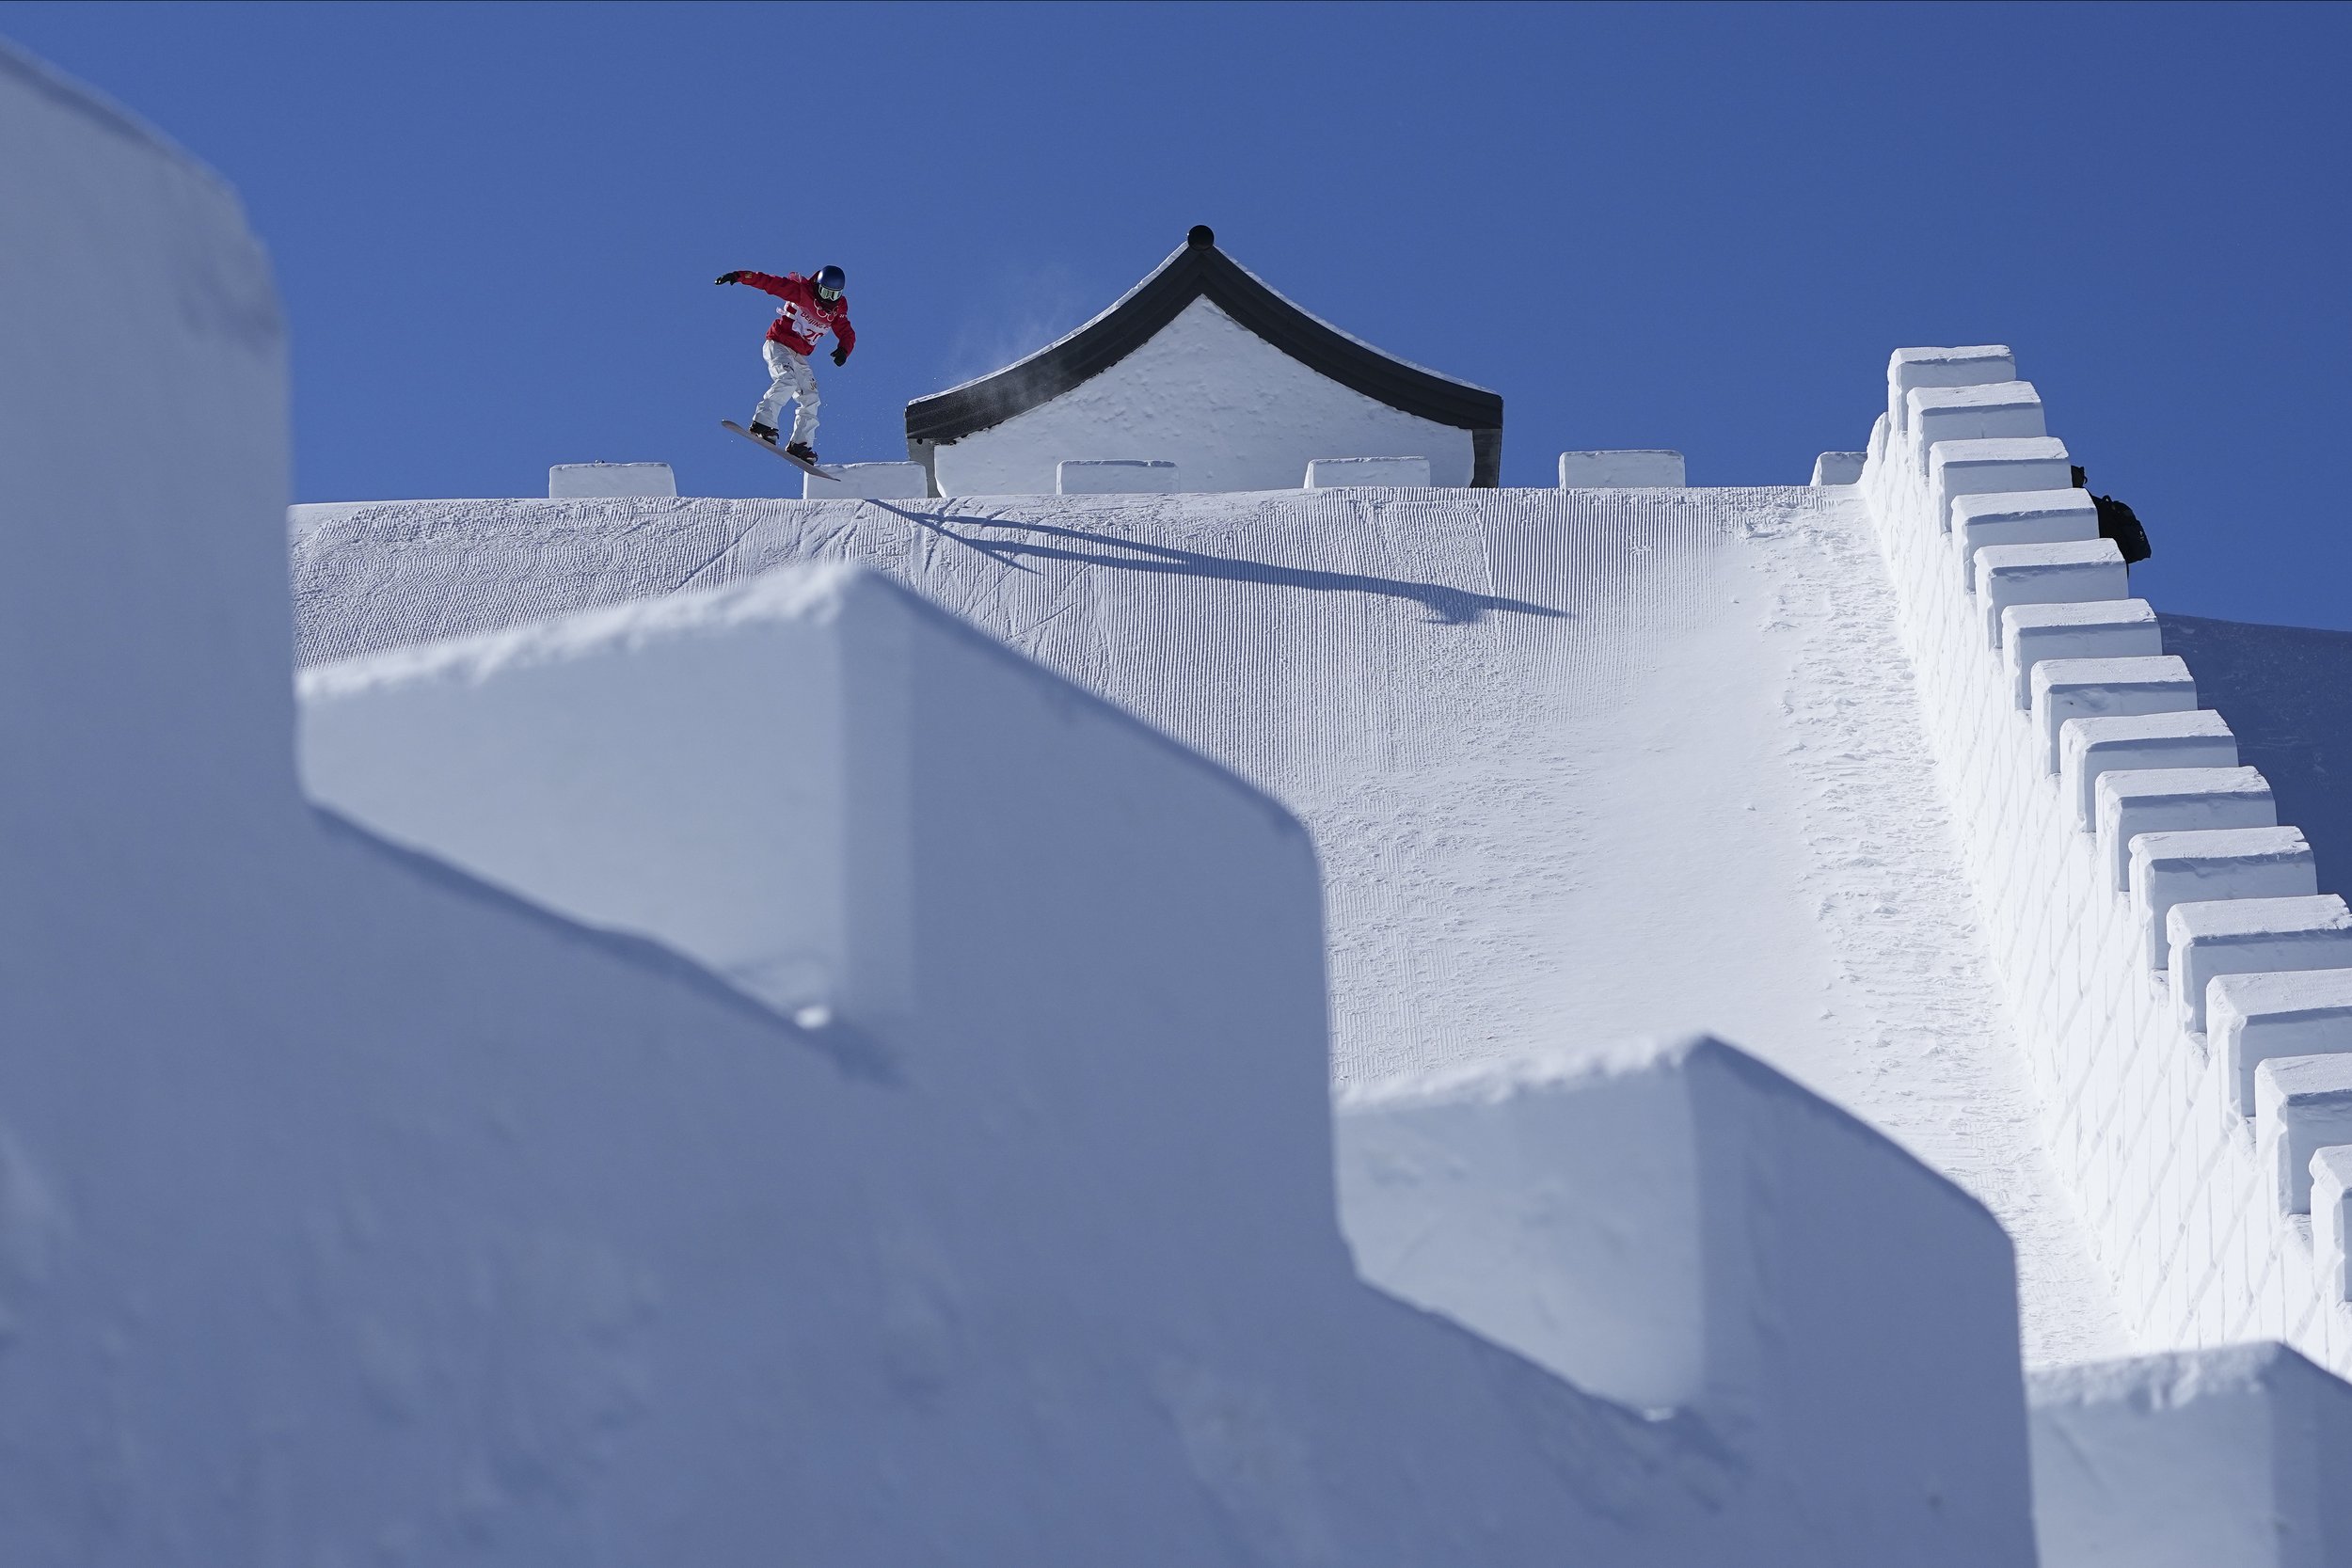  Japan's Miyabi Onitsuka competes during the women's slopestyle qualifying at the 2022 Winter Olympics, Saturday, Feb. 5, 2022, in Zhangjiakou, China. (AP Photo/Gregory Bull) 